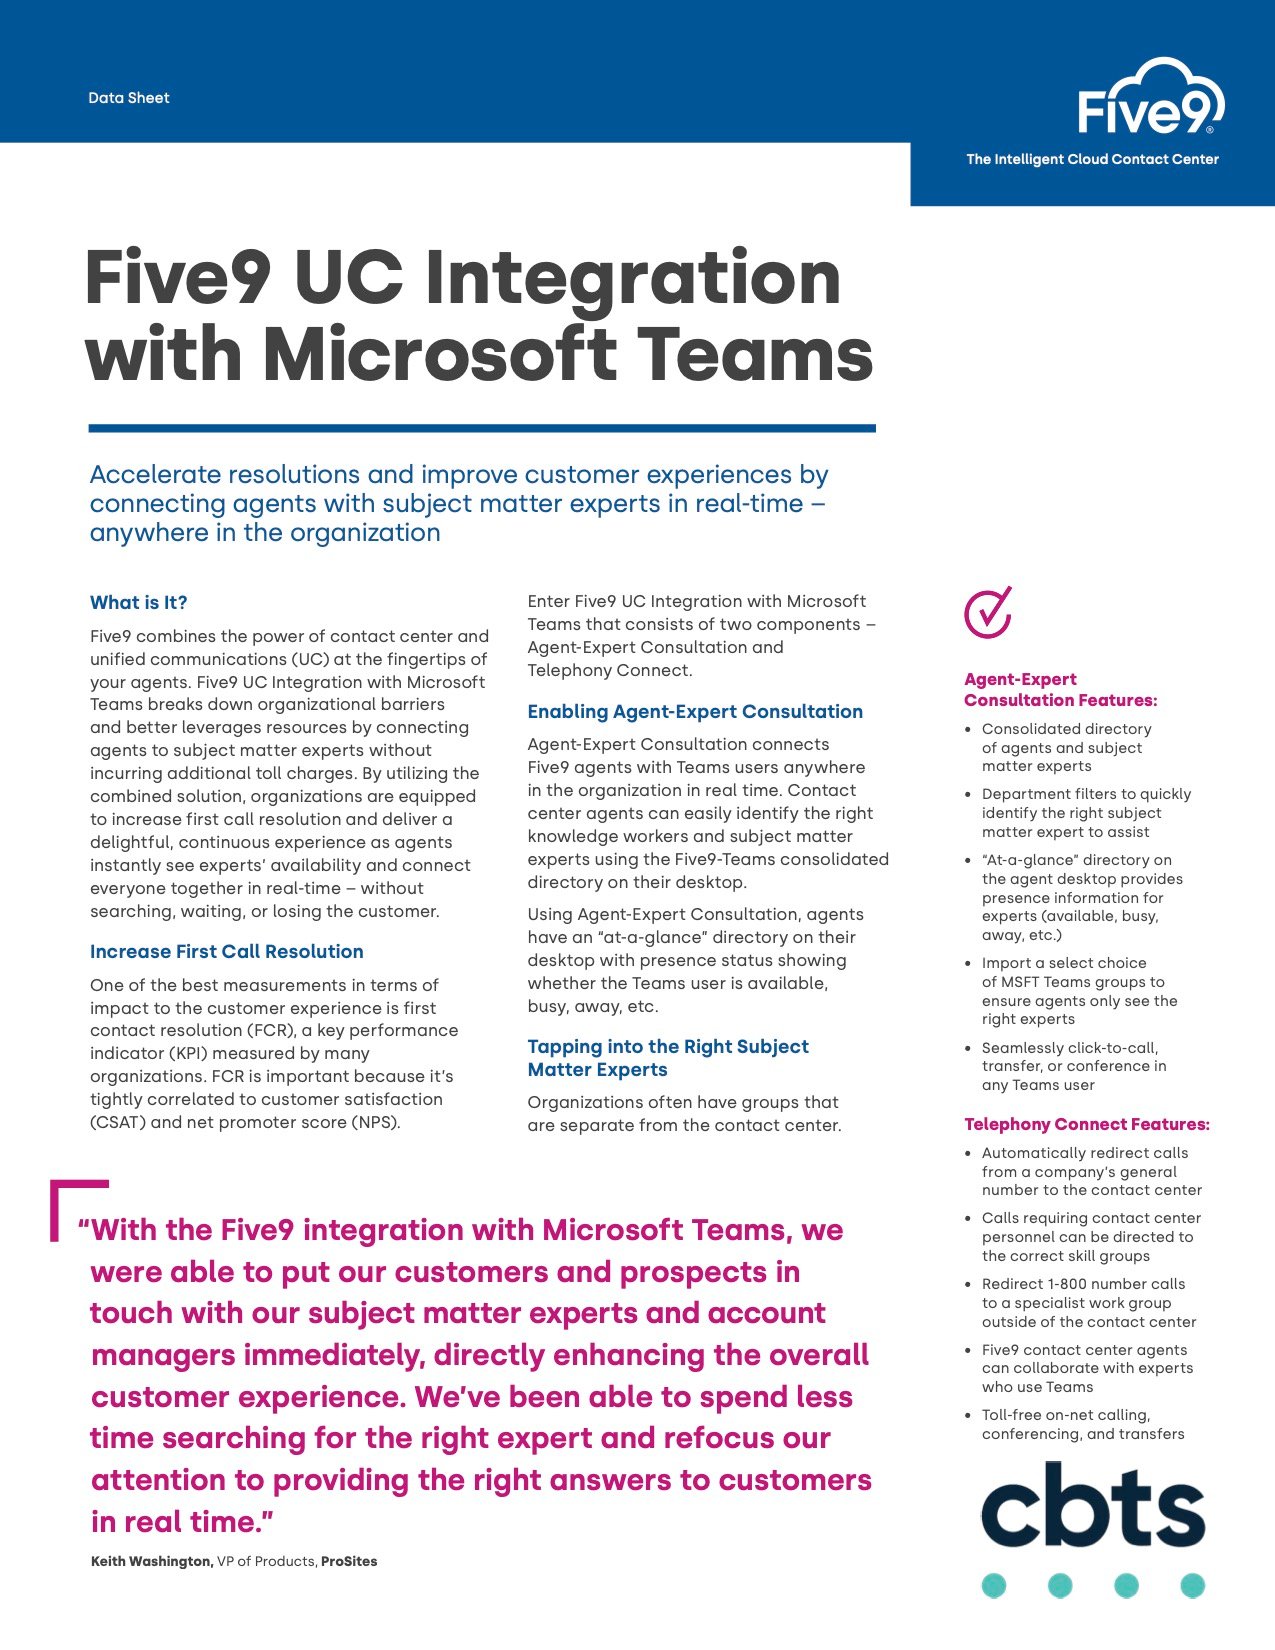 CBTS_Five9_and_Microsoft_Teams01